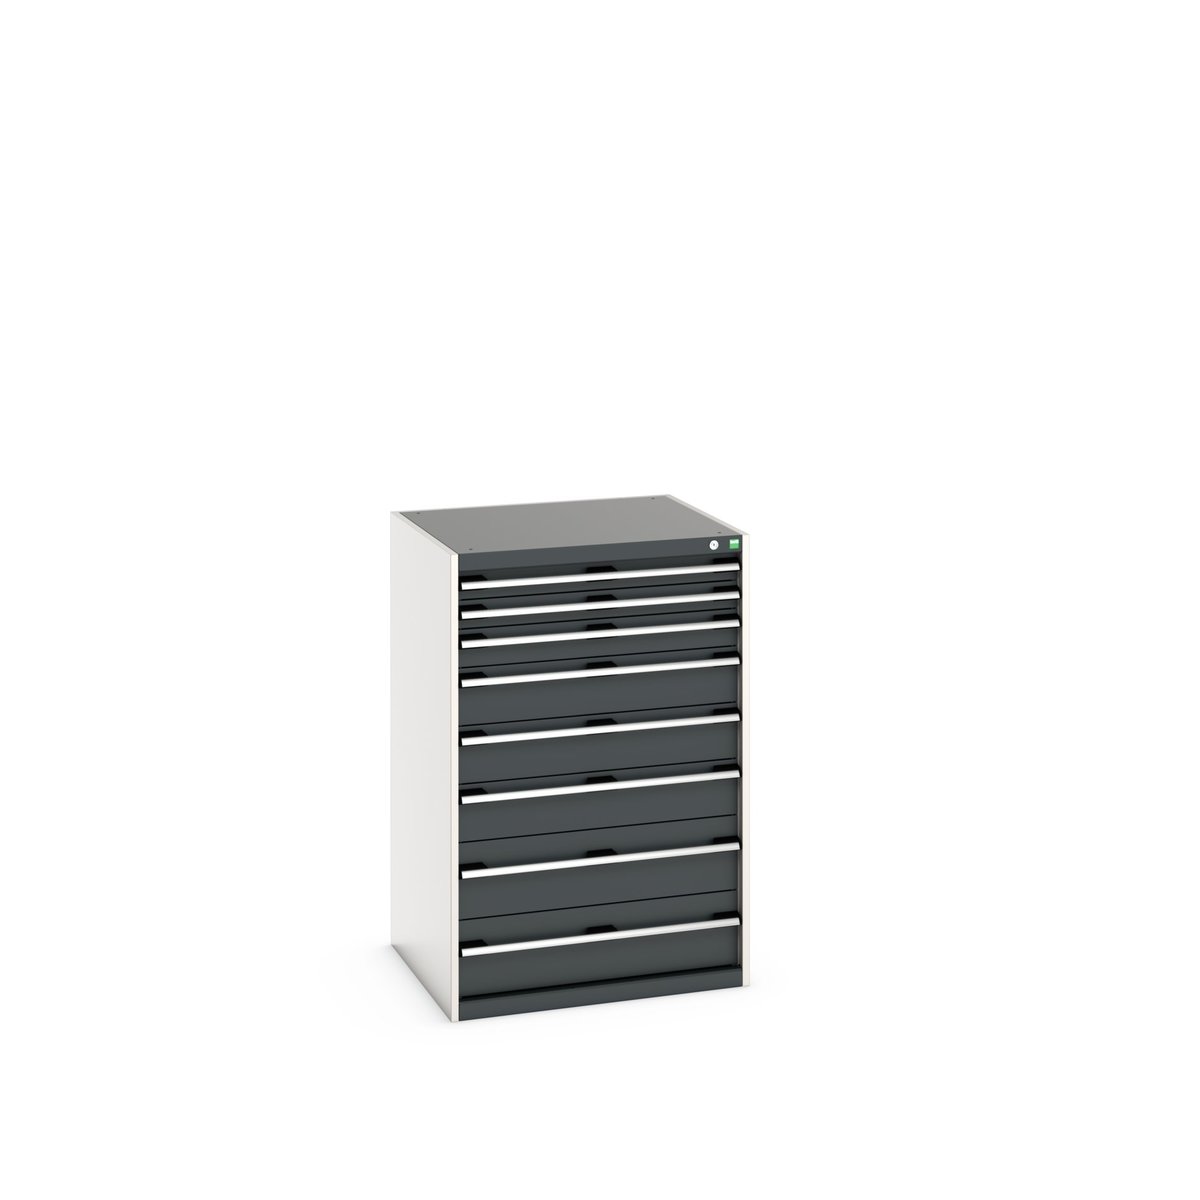 40028034. - cubio drawer cabinet 